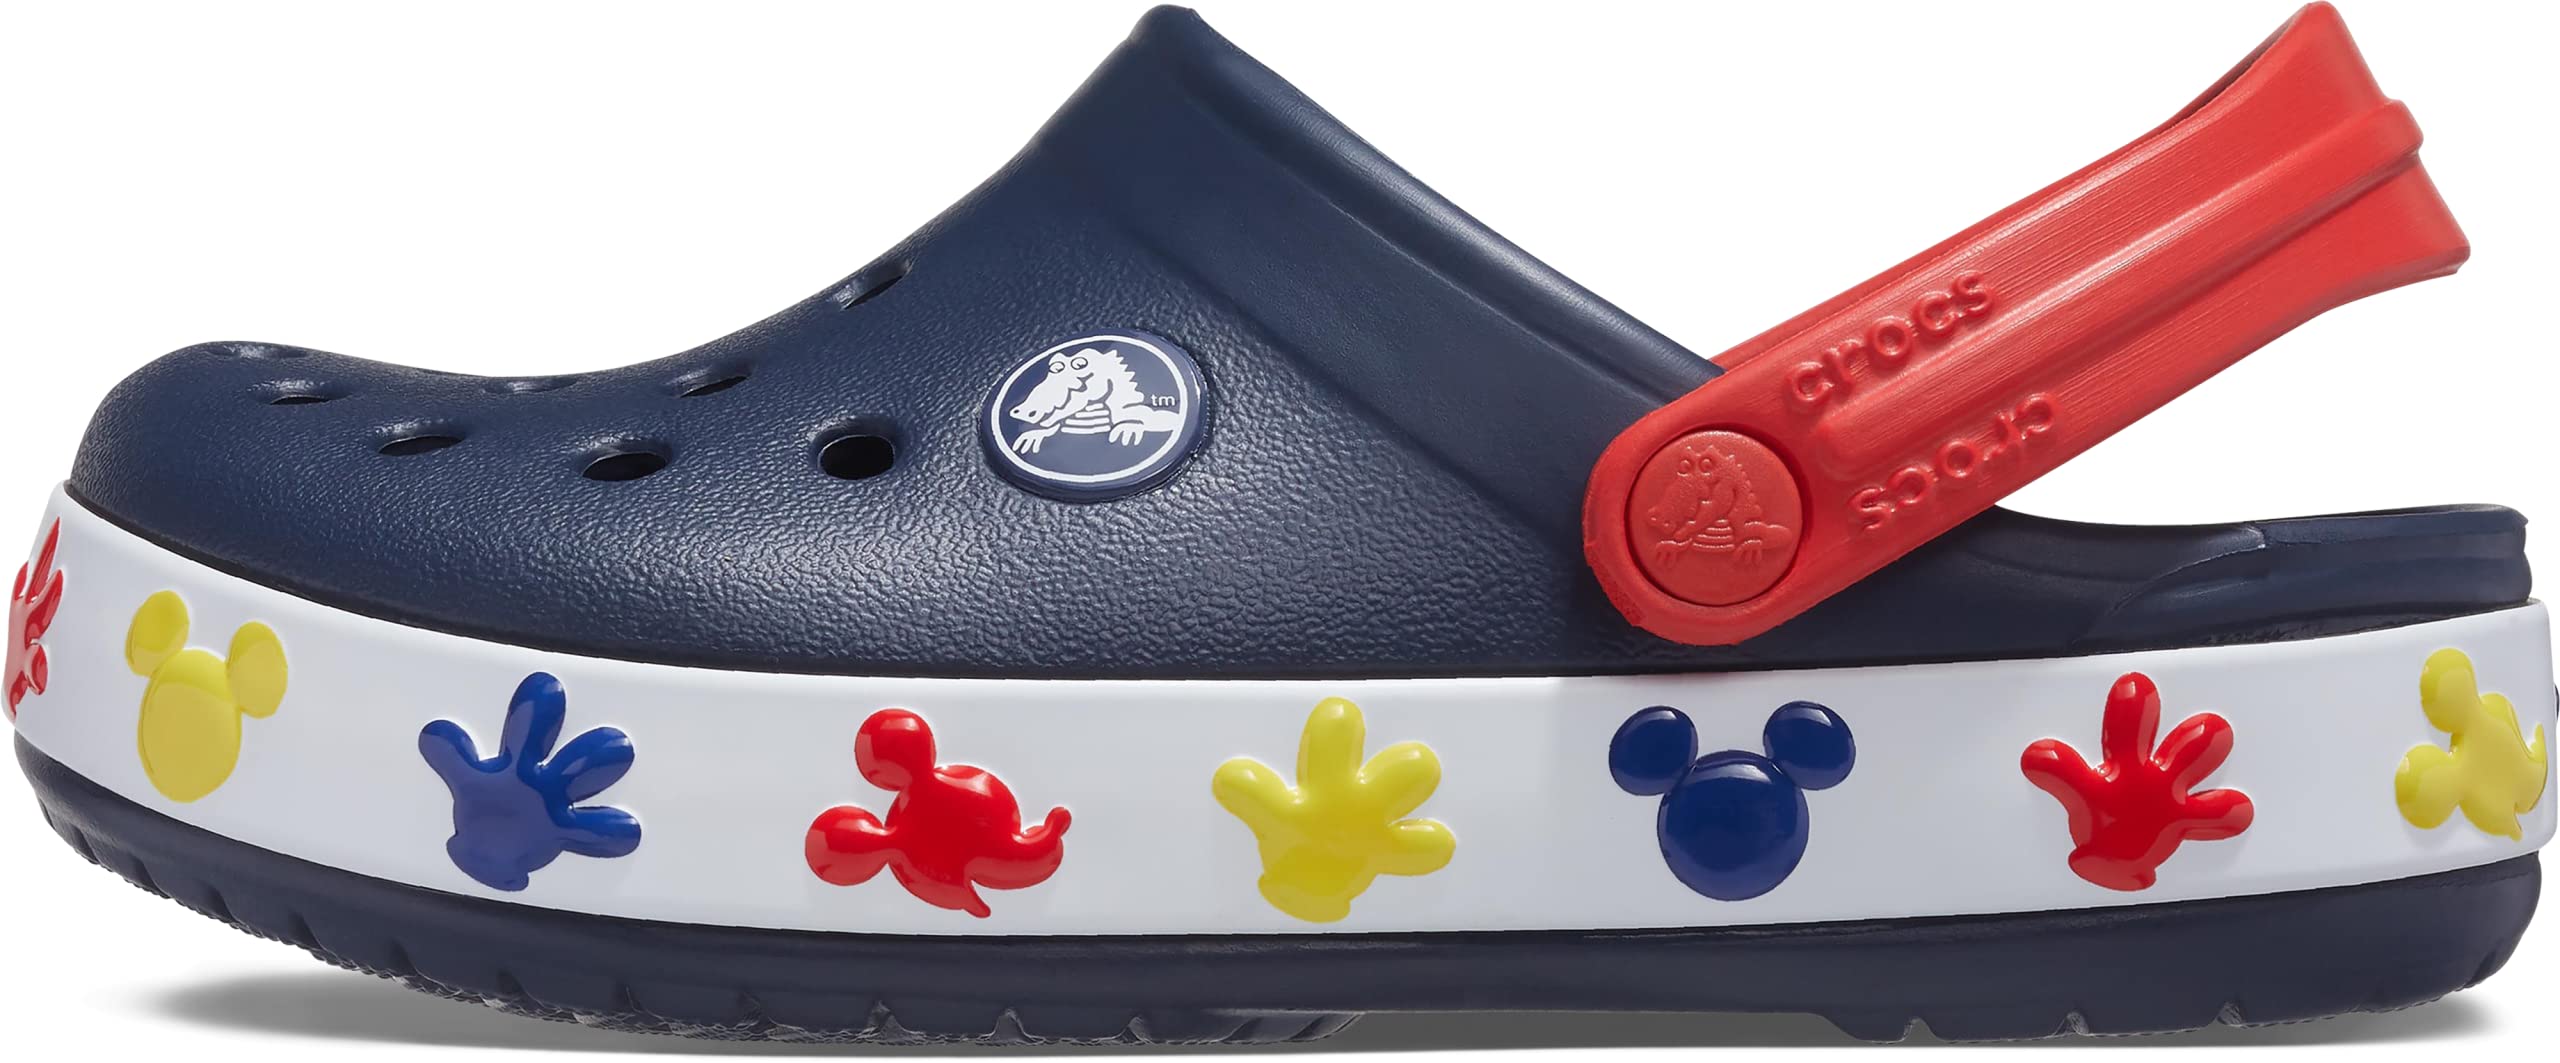 Crocs Kids' Mickey Mouse Clog | Disney Light Up Shoes